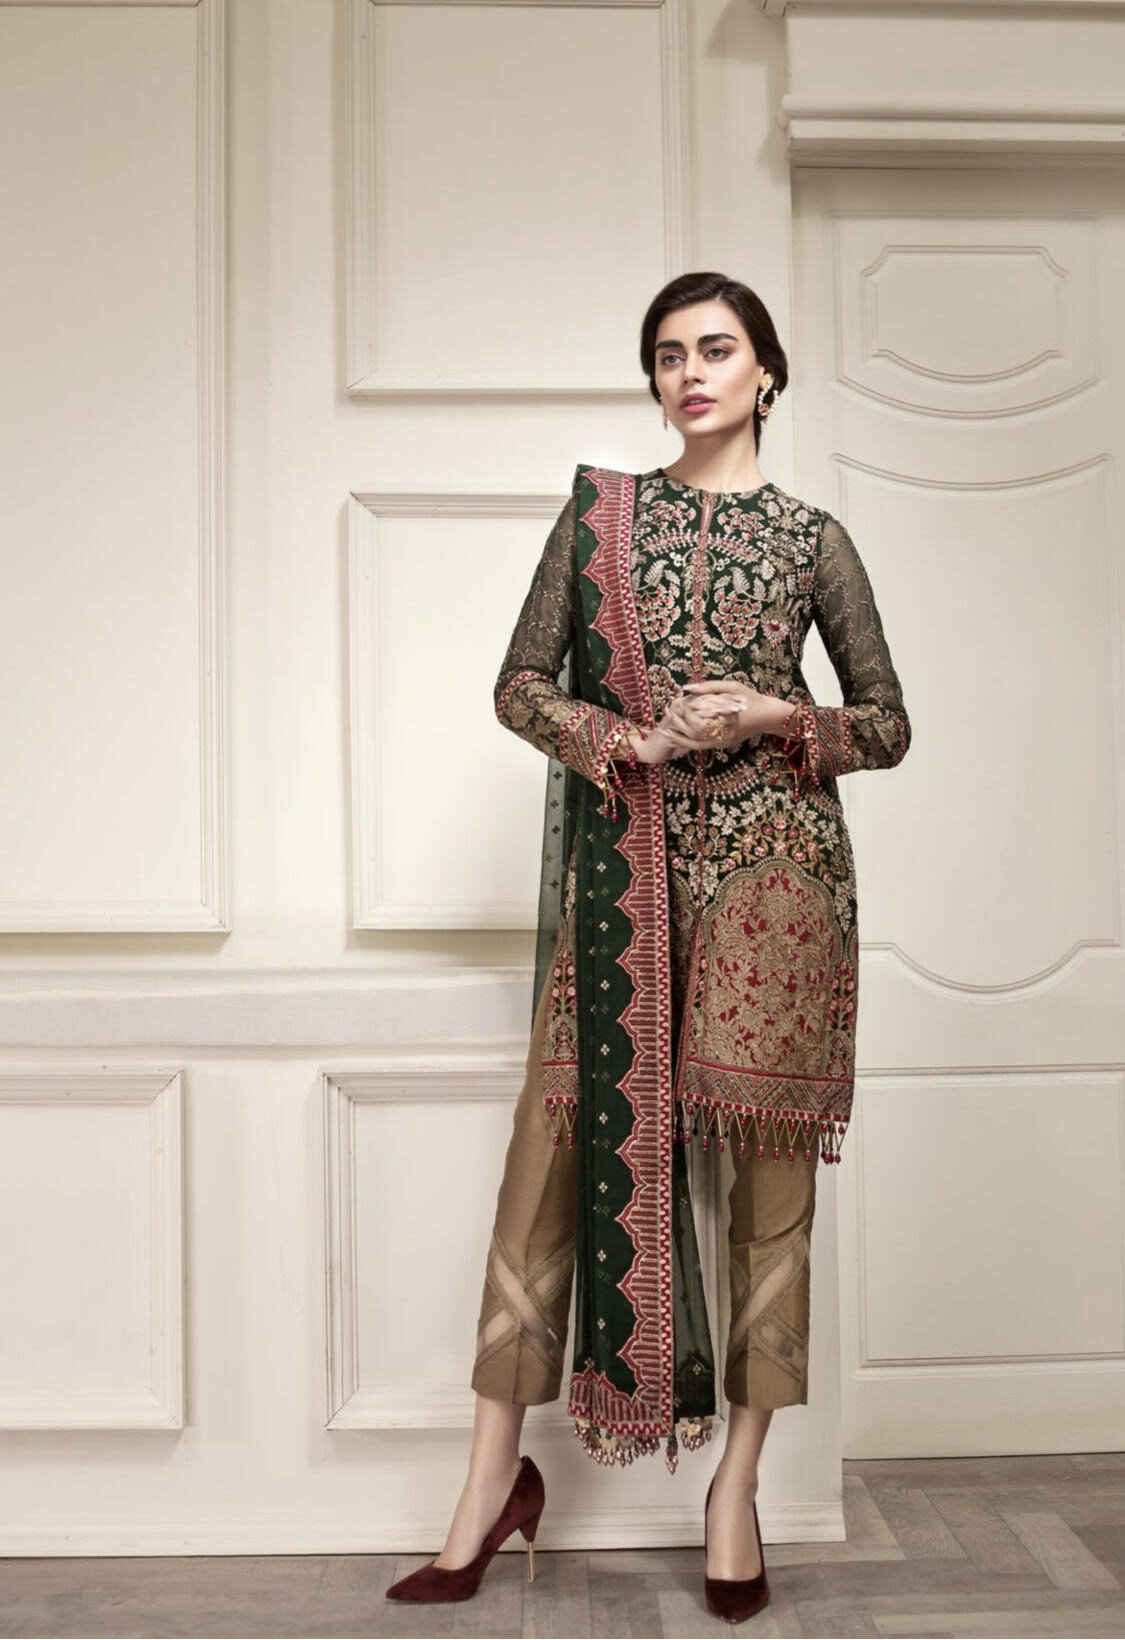 Baroque Jazmin Maria B Elan 2019 Collection Latest Embroidery Shalwar Kamez Suit 